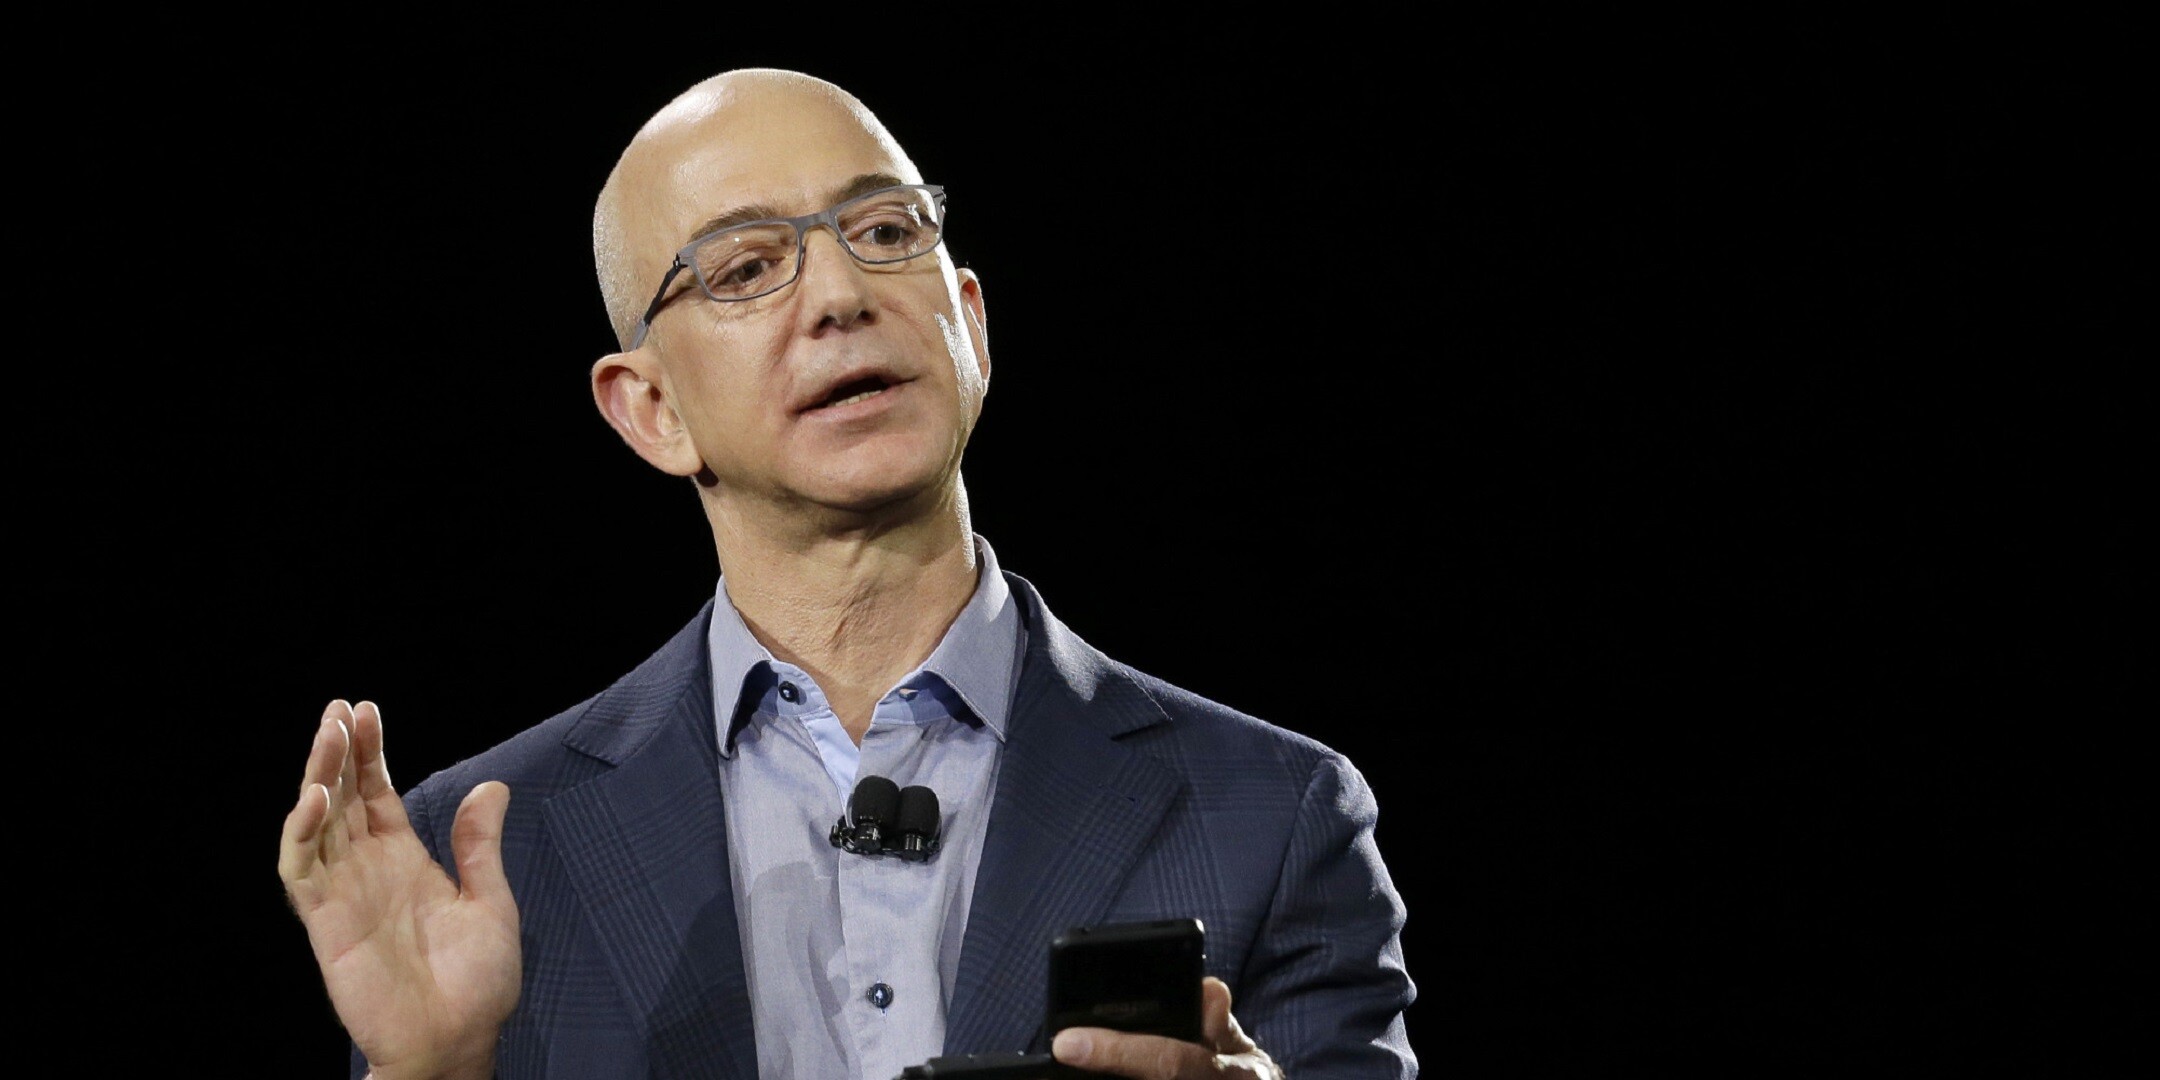 Jeff Bezos: Amazon billionaire, Celebrity, Entrepreneur. 2160x1080 Dual Screen Wallpaper.